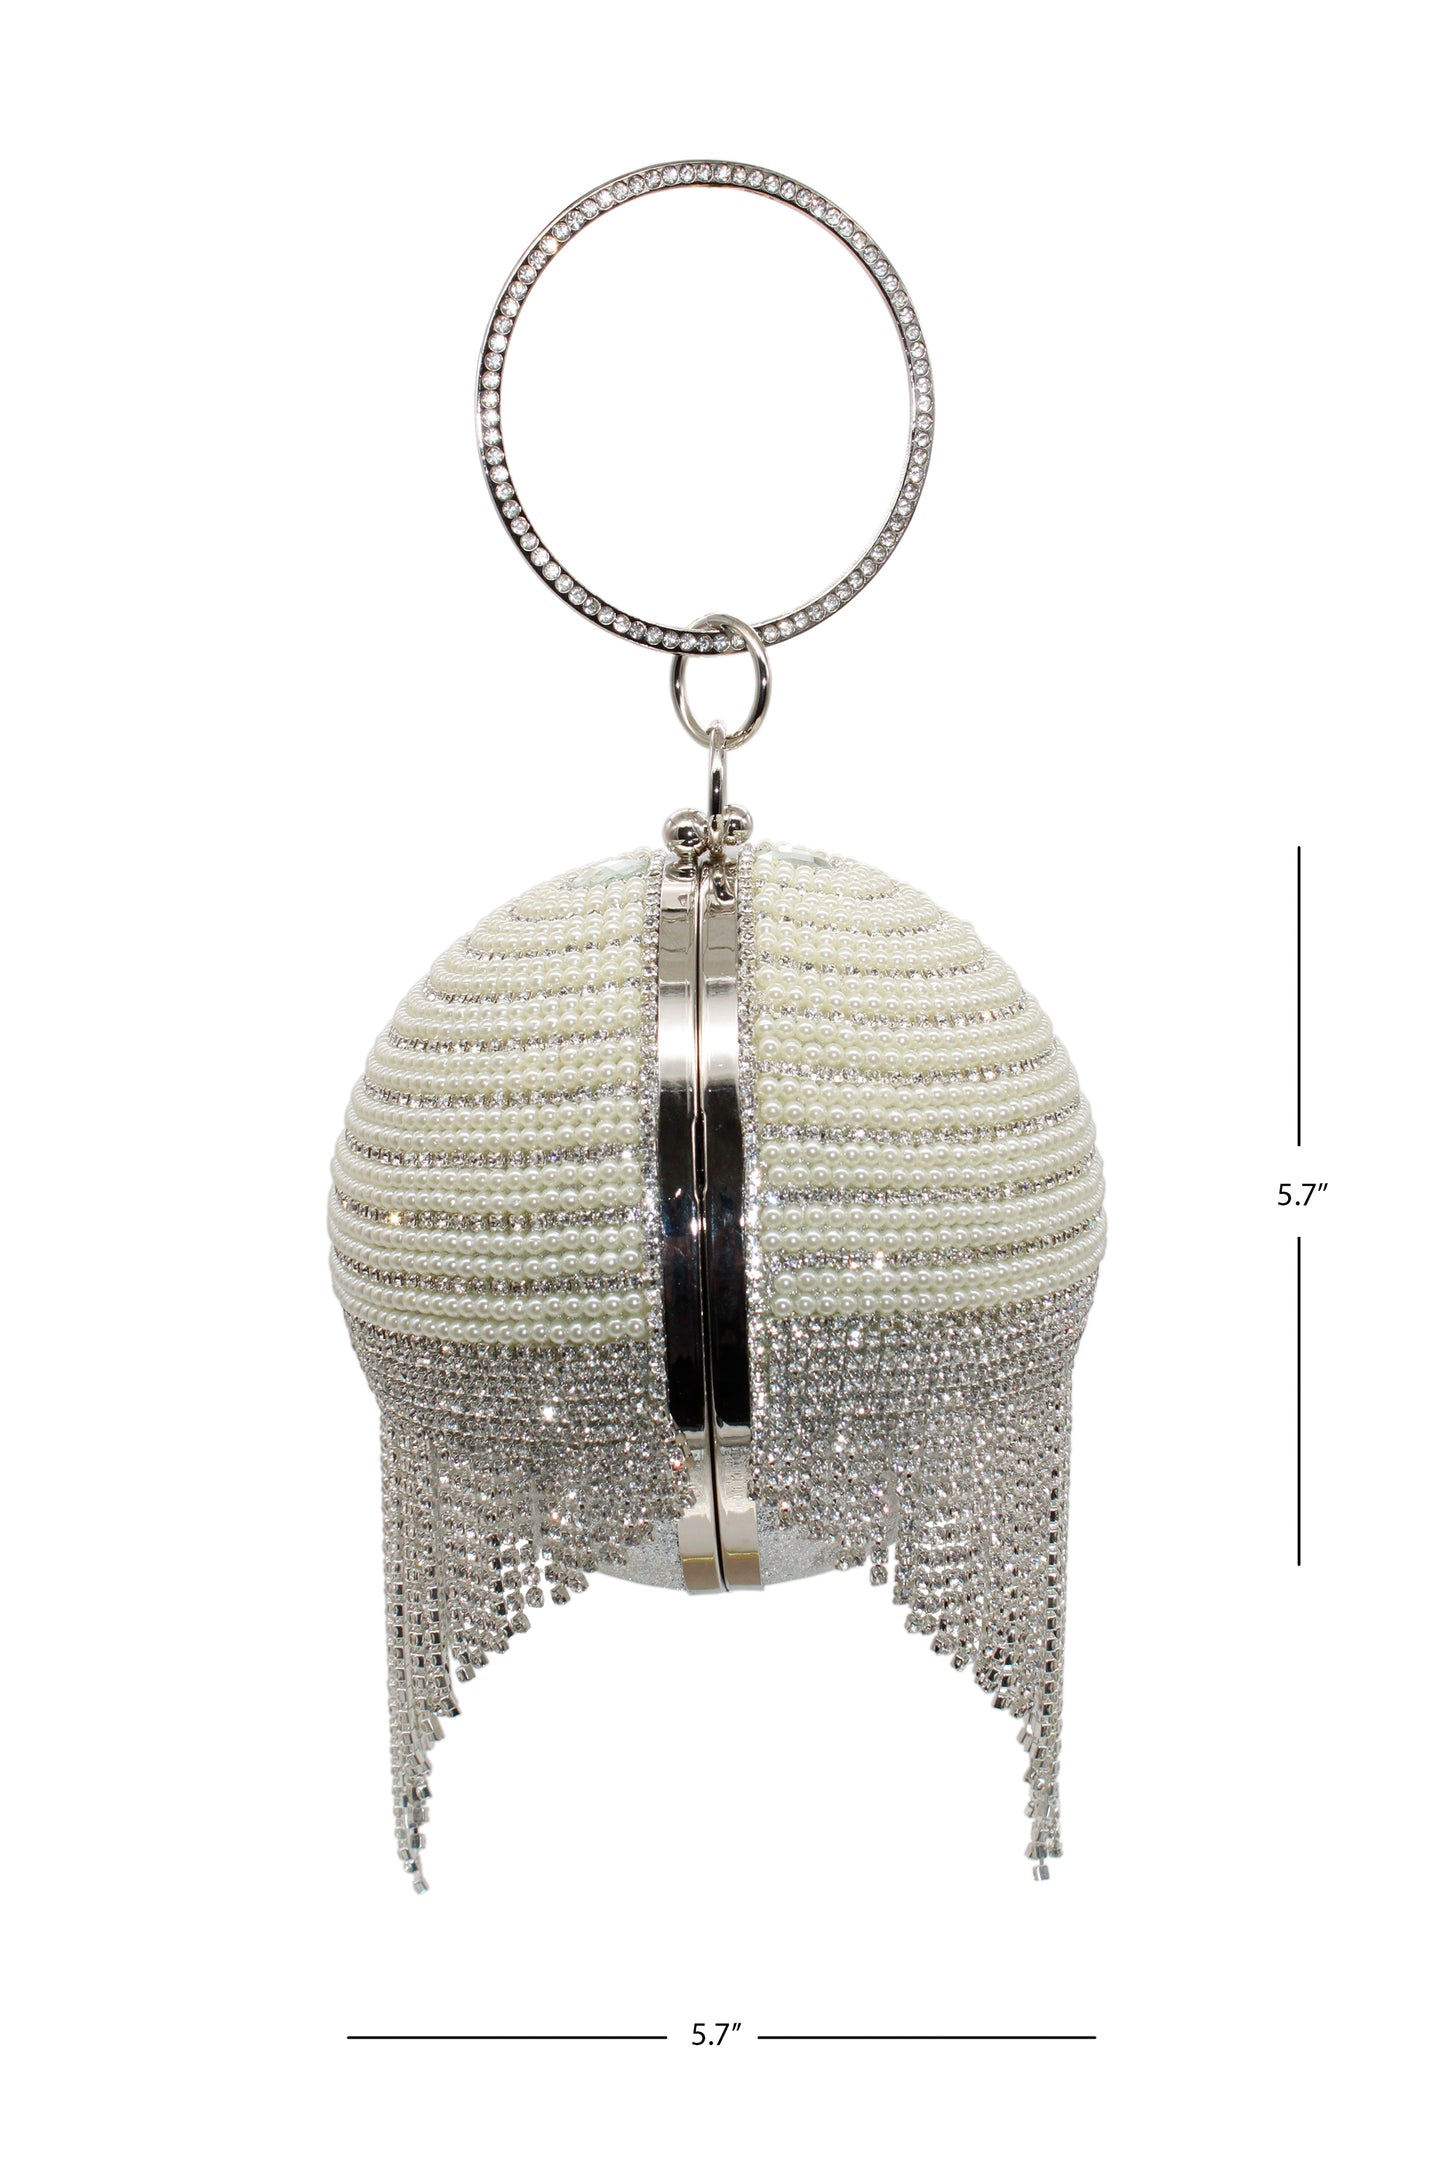 Pearl Bead and Bling Crystal Luxury Ball-Shaped Silver Handbag